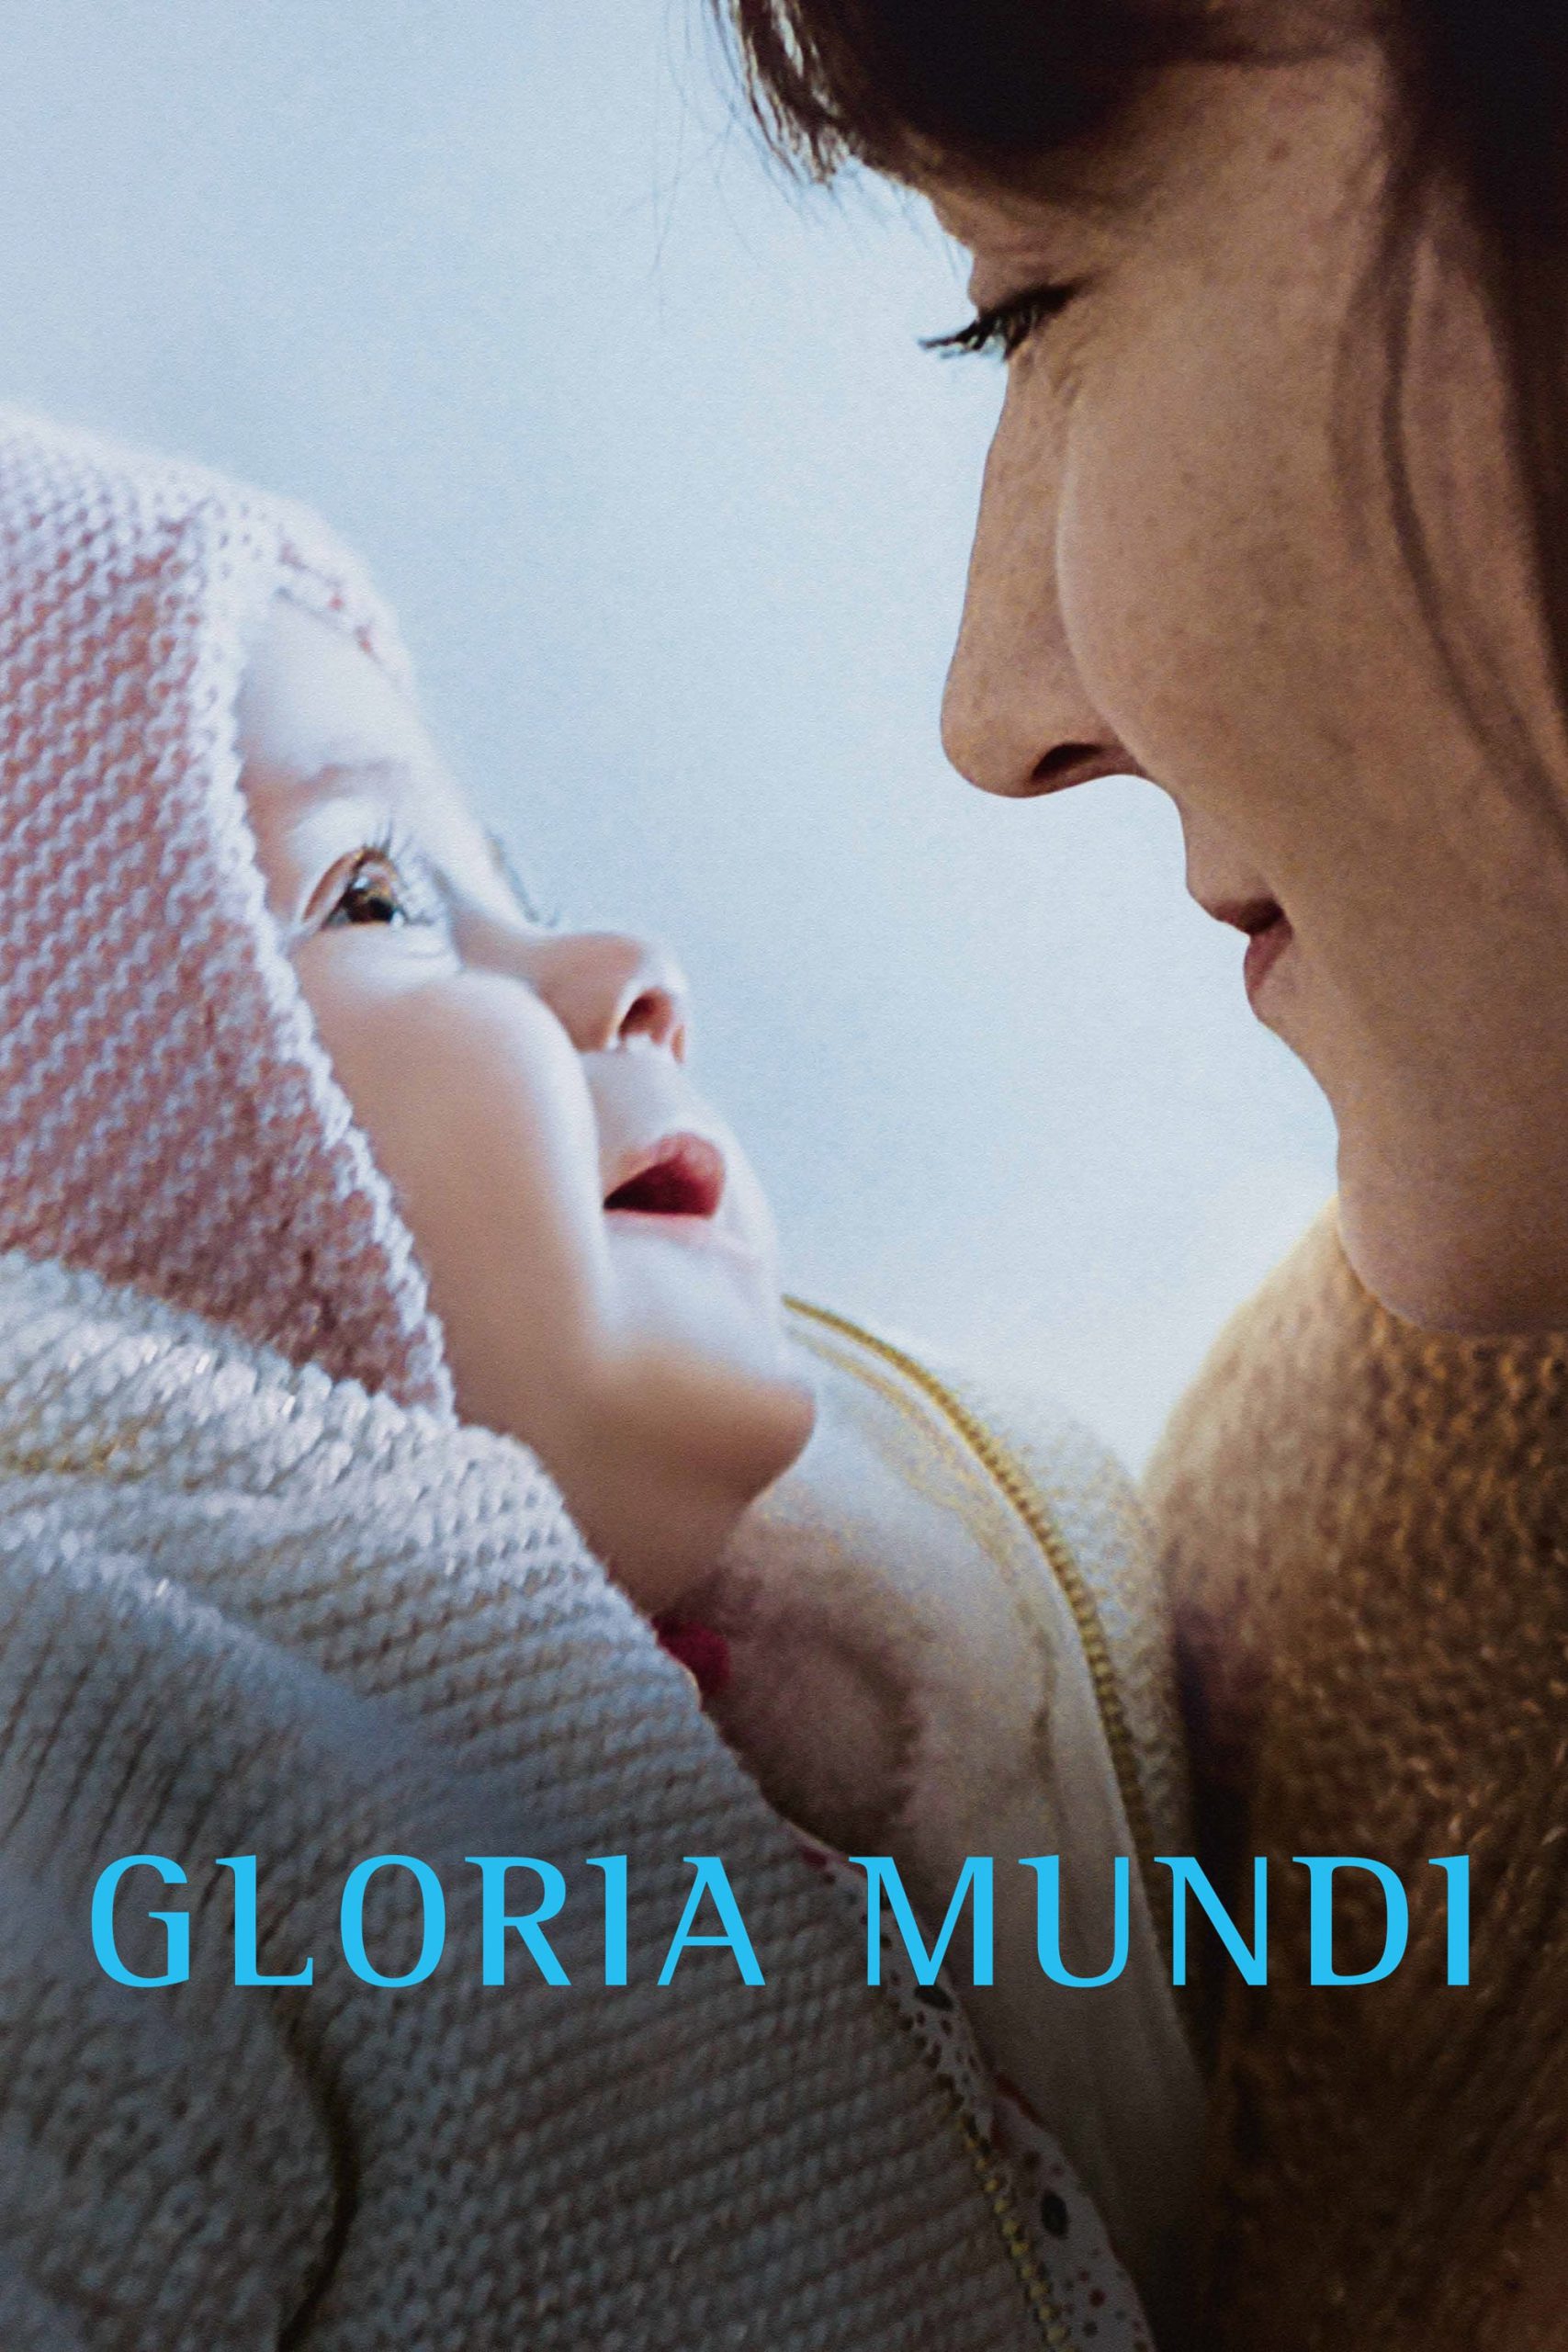 Gloria Mundi [Sub-ITA] (2019)